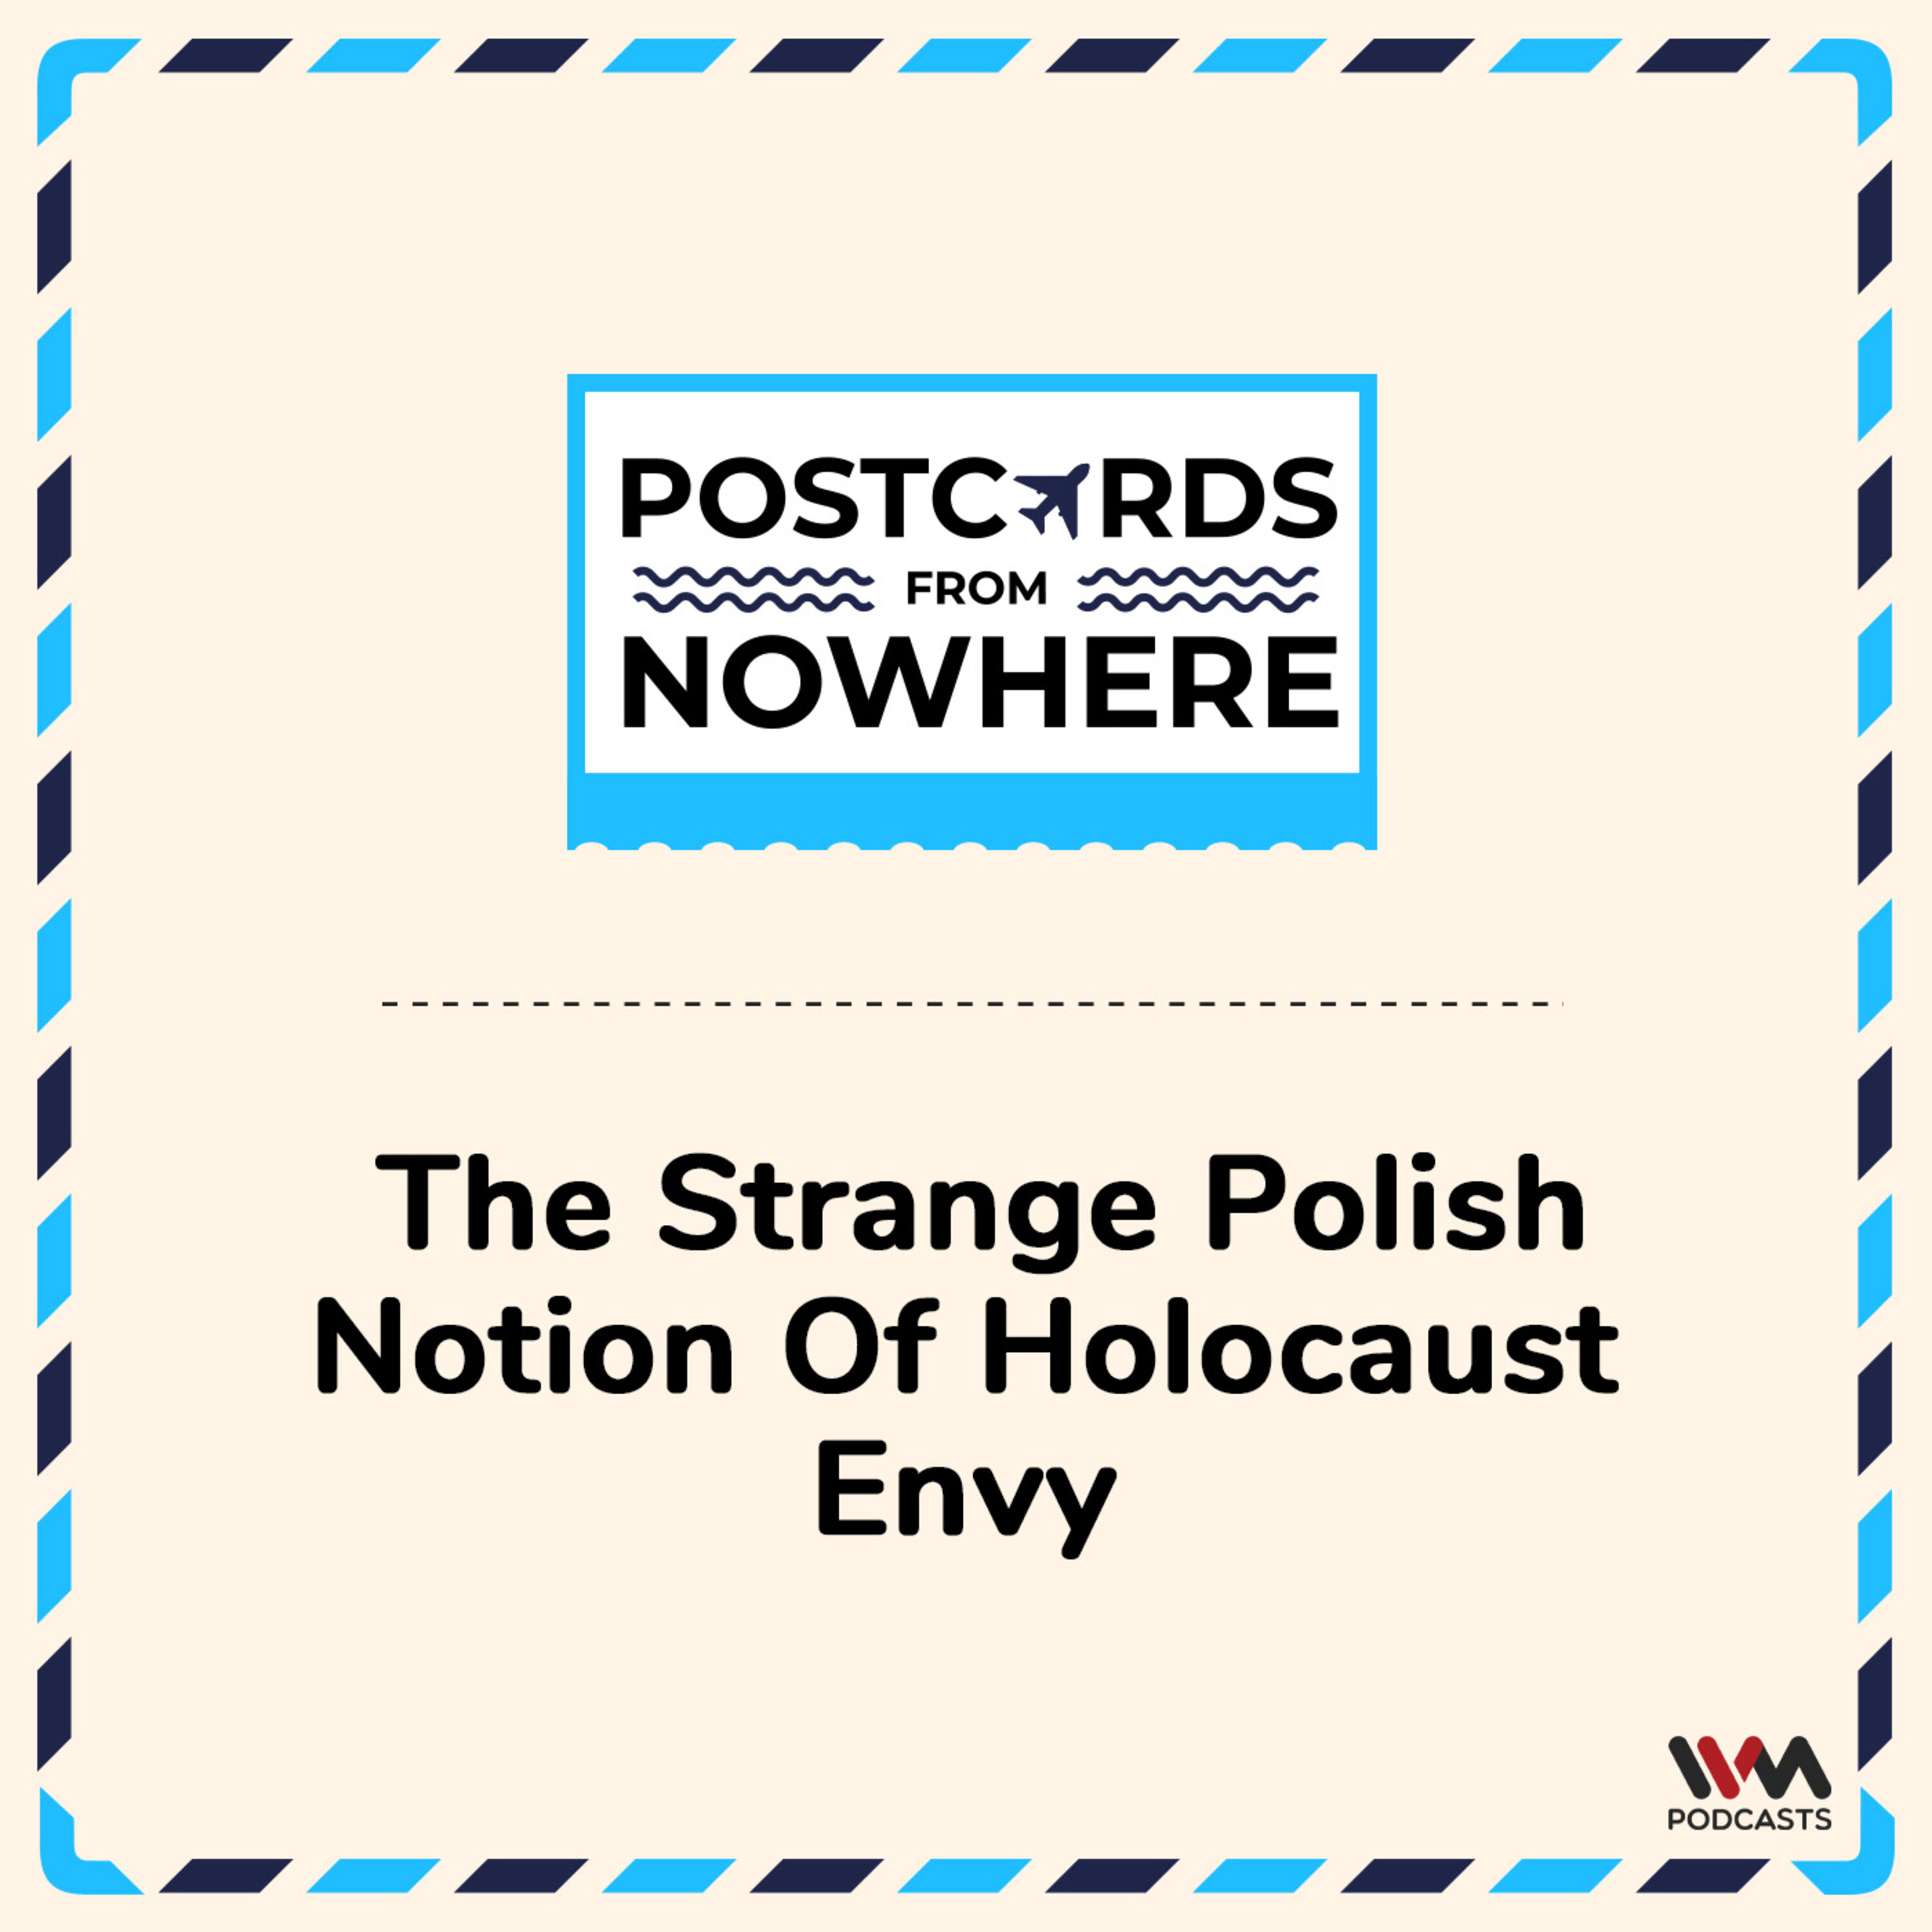 The Strange Polish notion of Holocaust Envy